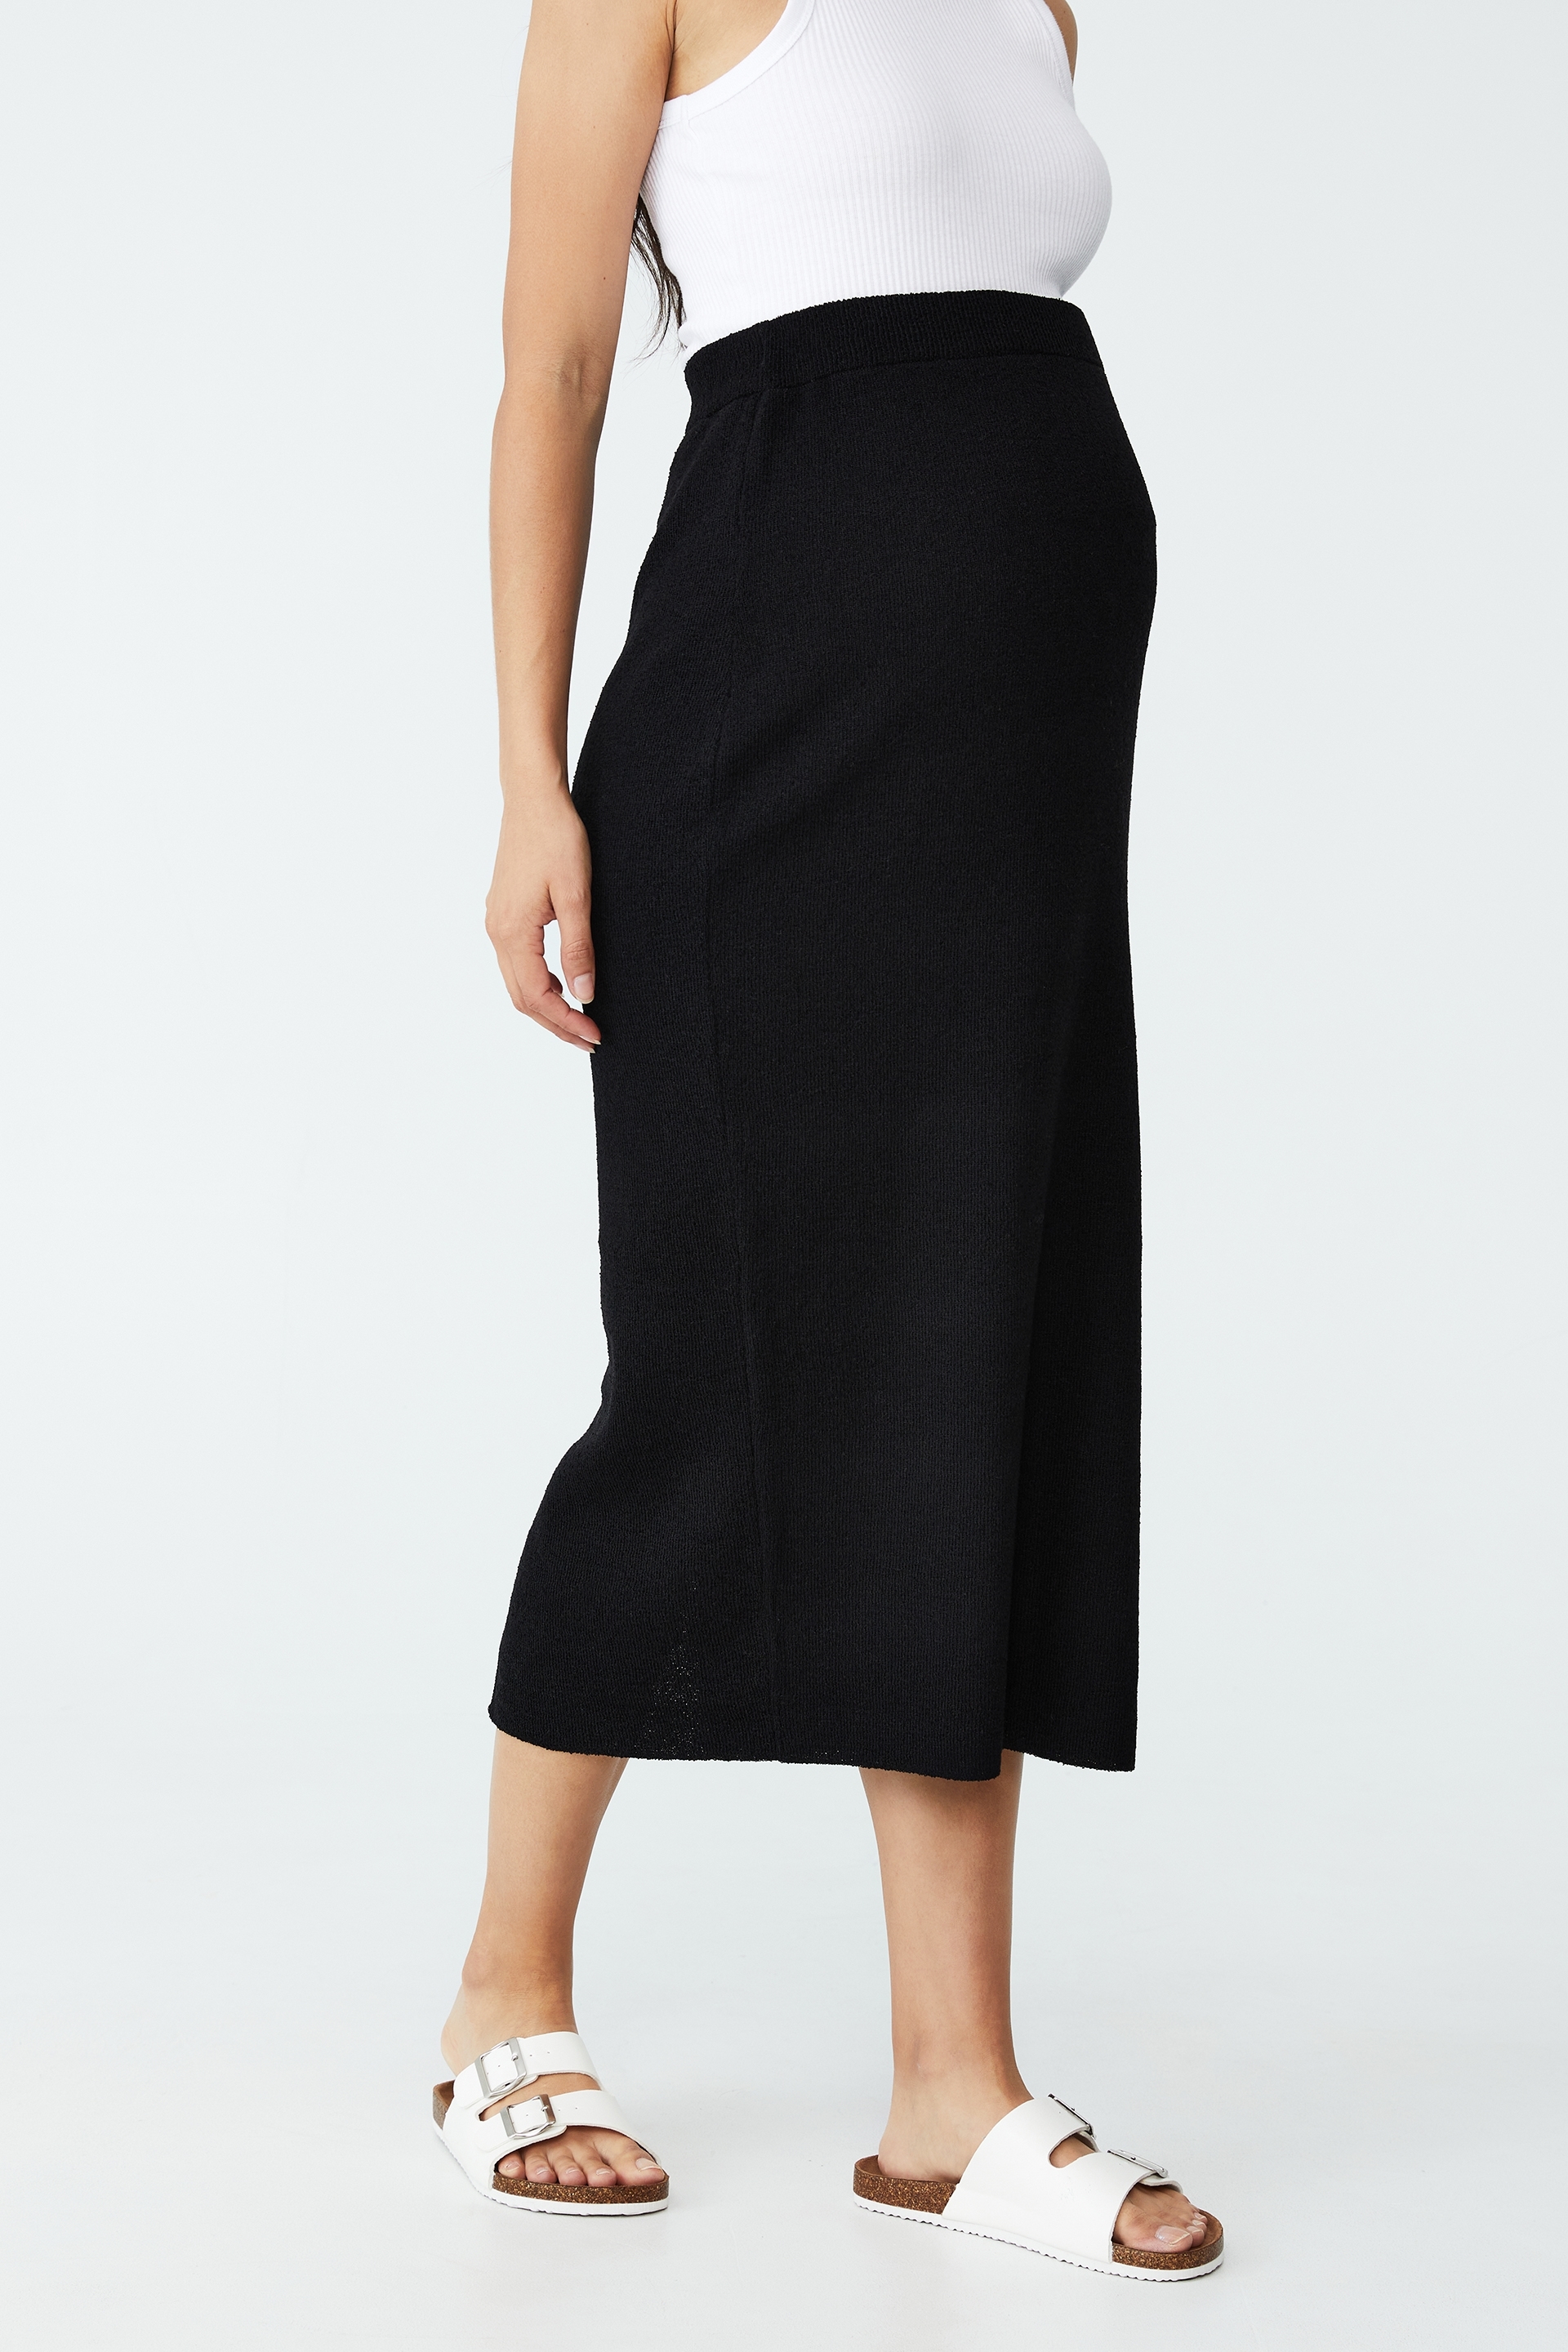 Cotton On Women - Maternity Friendly Set Up Midi Skirt - Black